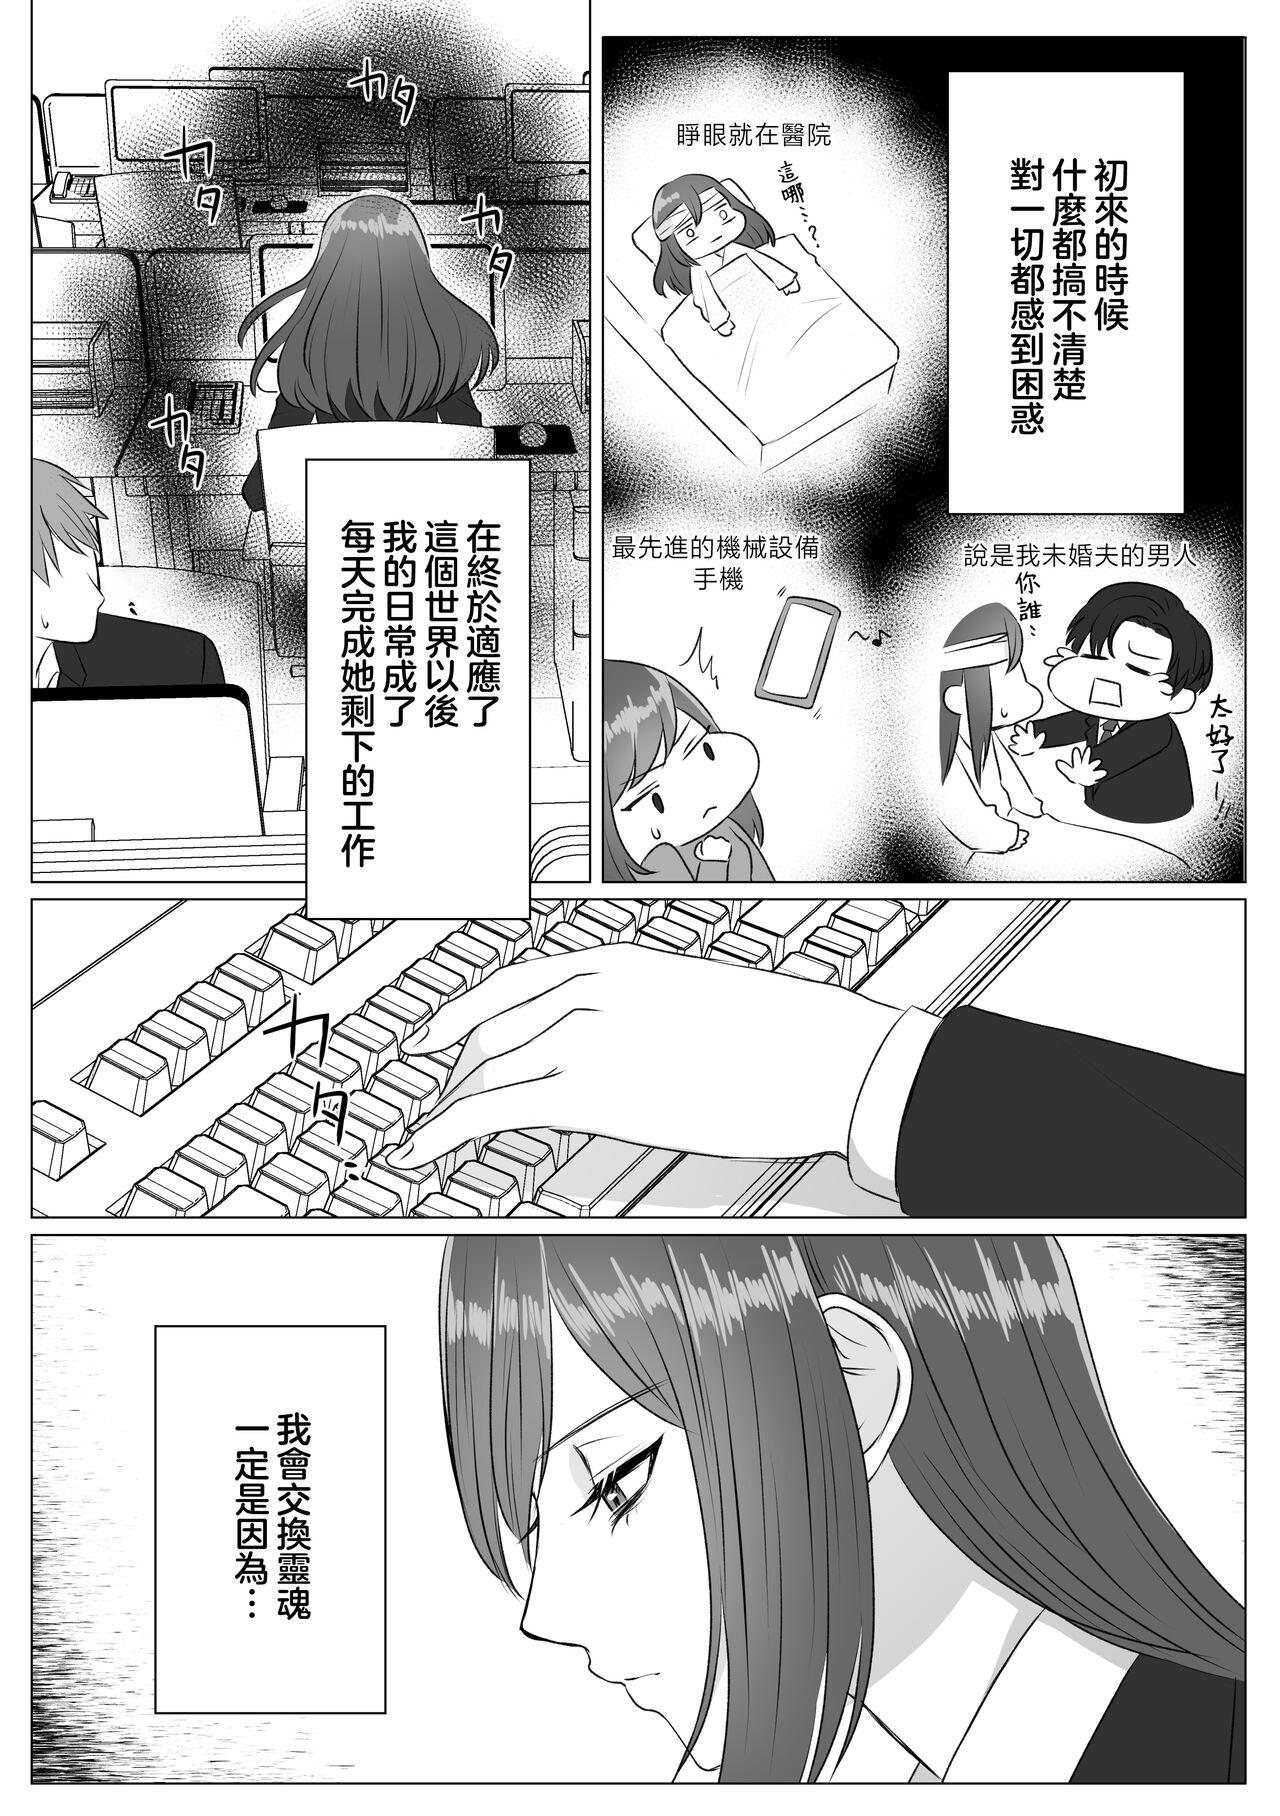 Romantic Shinizokonai no akuyaku reijō wa shiawaseninaritai | 寻死未果的恶役千金想变得幸福 - Original Denmark - Page 6